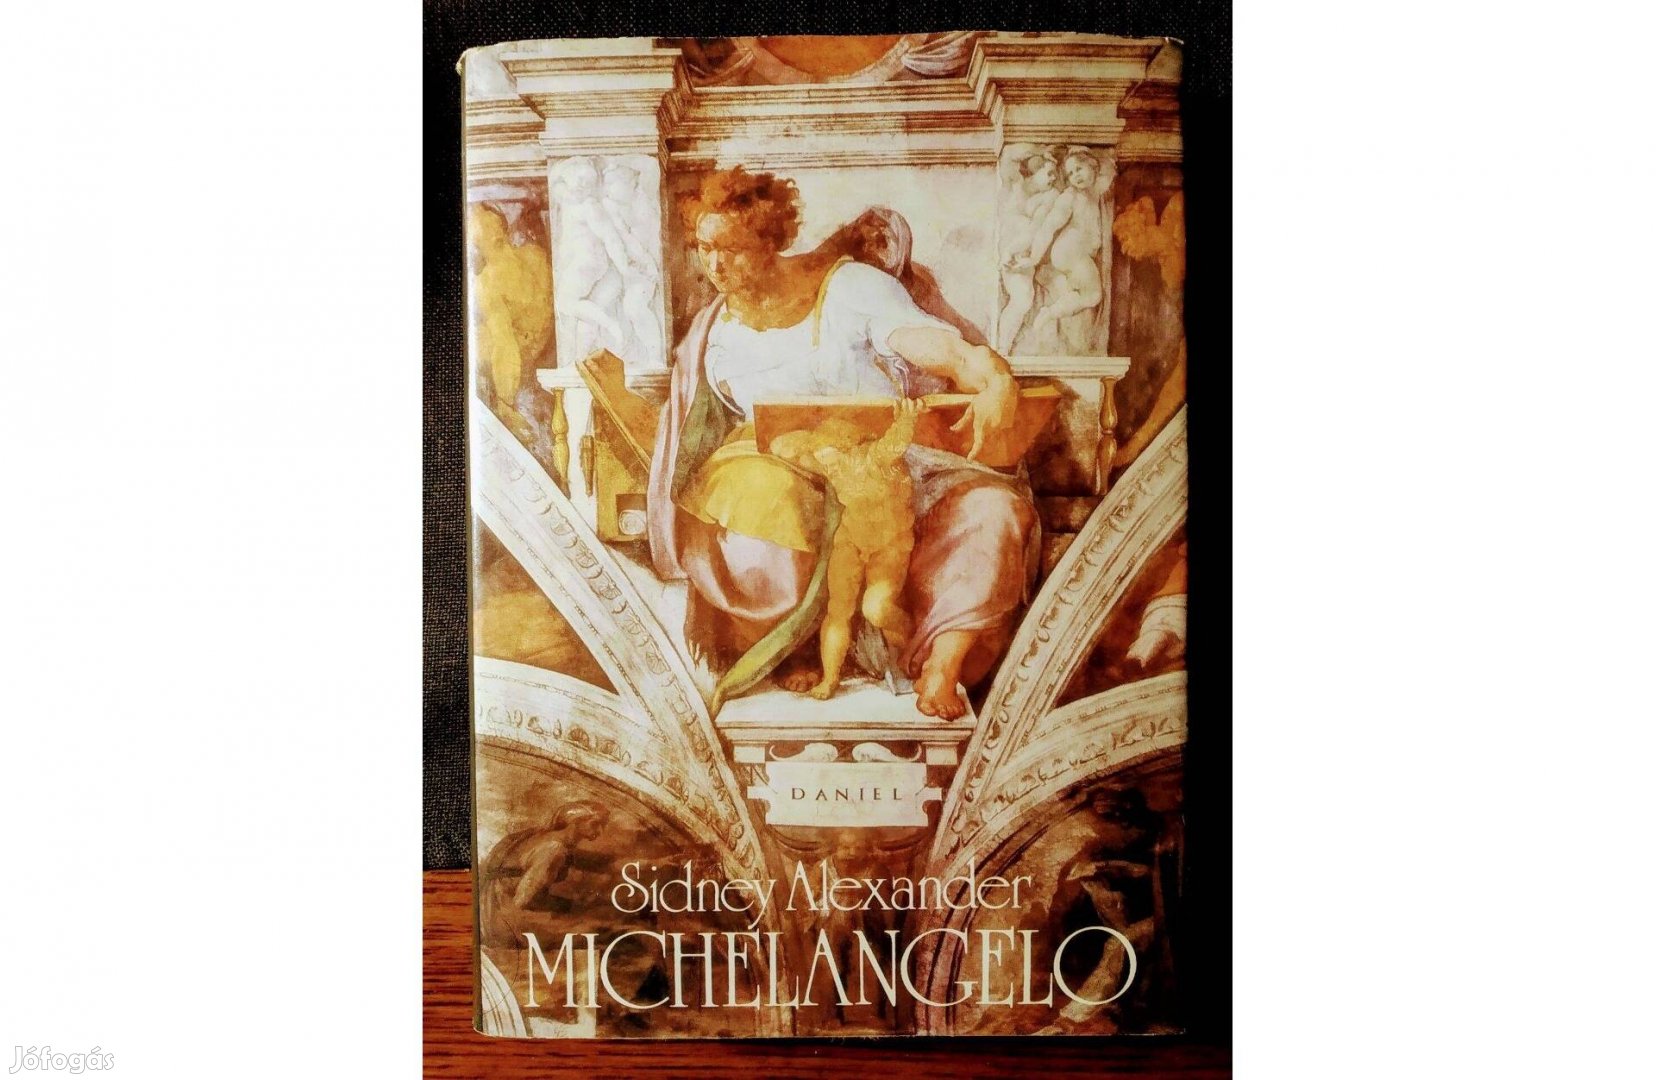 Michelangelo (Alexander) Sidney Alexander Corvina Kiadó, 1986